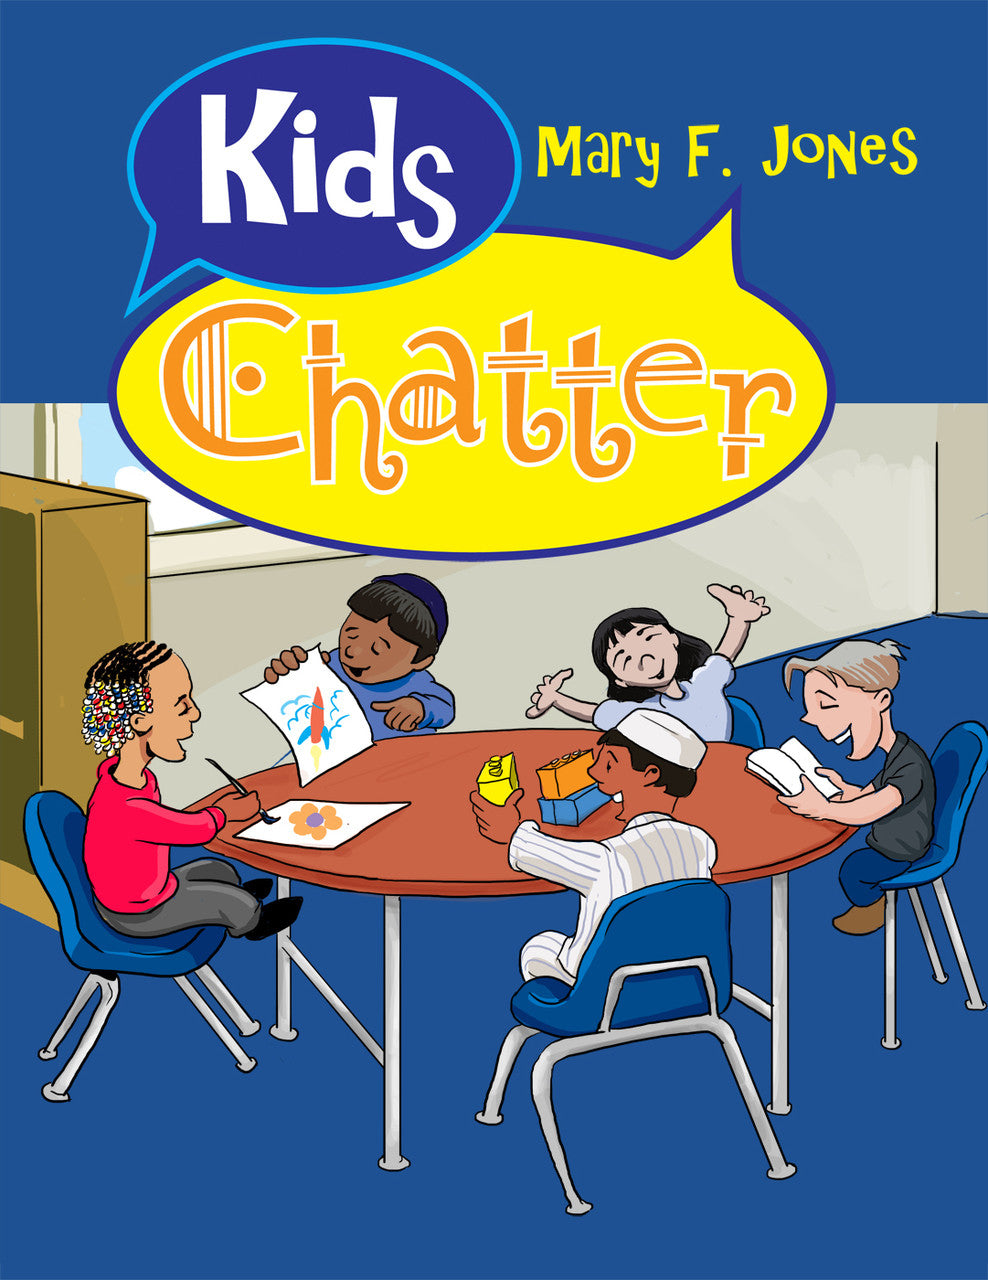 Kids Chatter